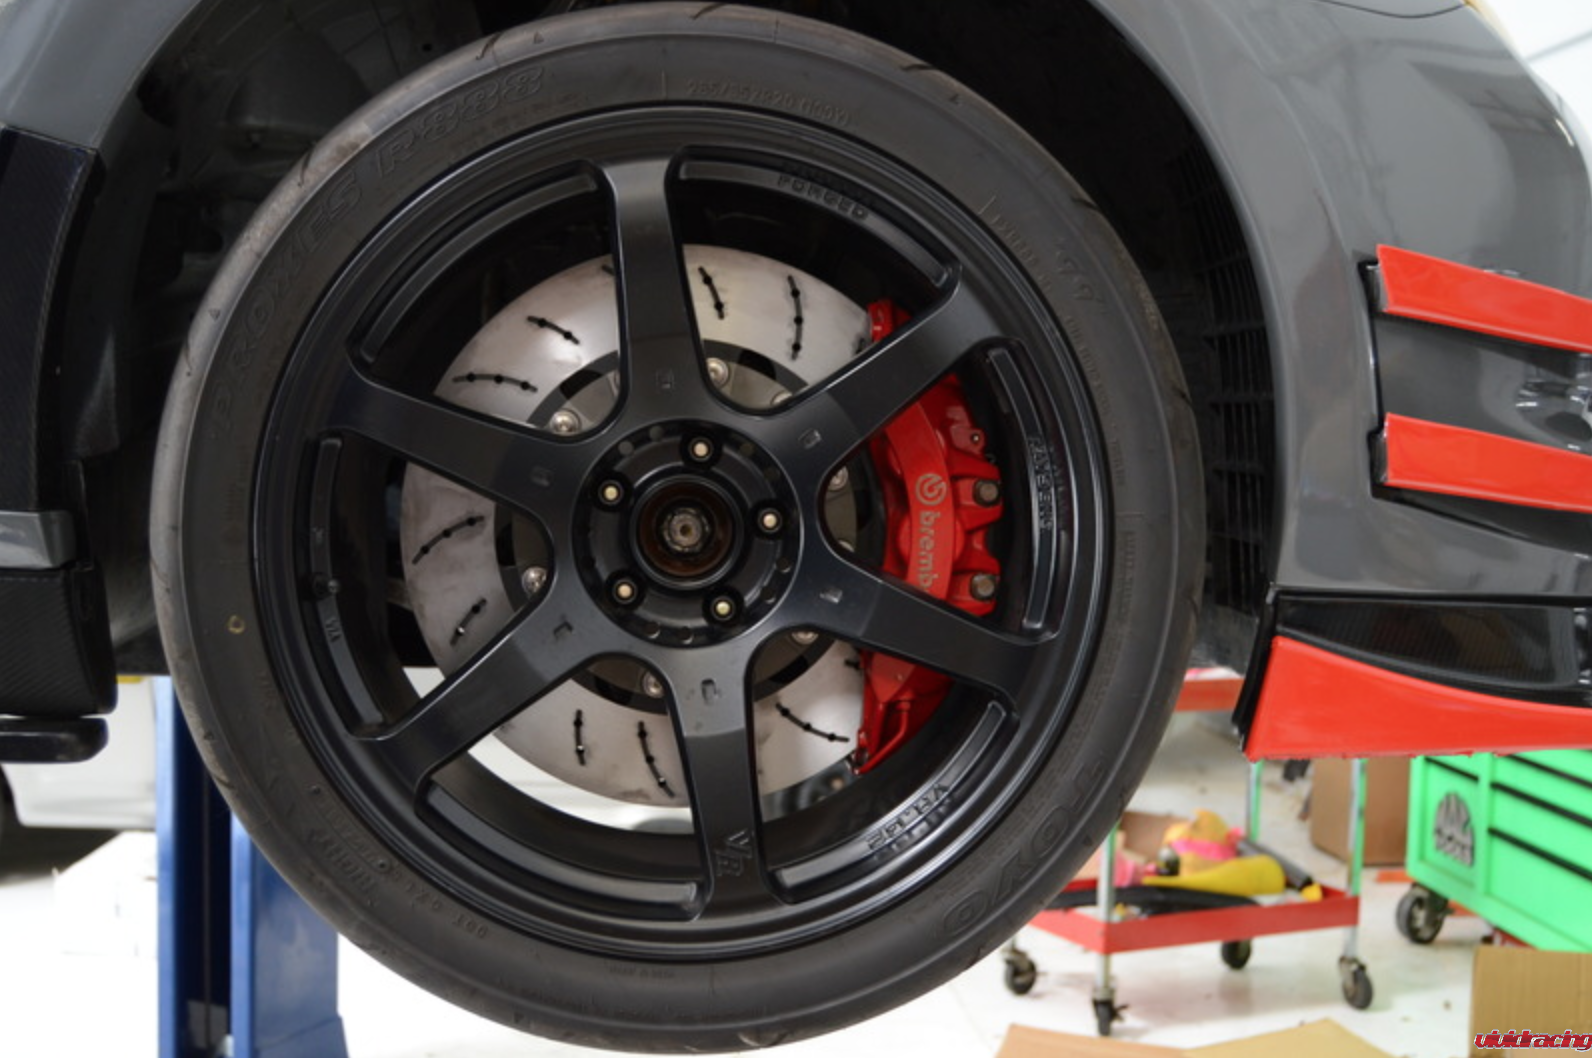 Nissan GTR, WP Pro, brake rotors, calipers, pads, upgrade, track